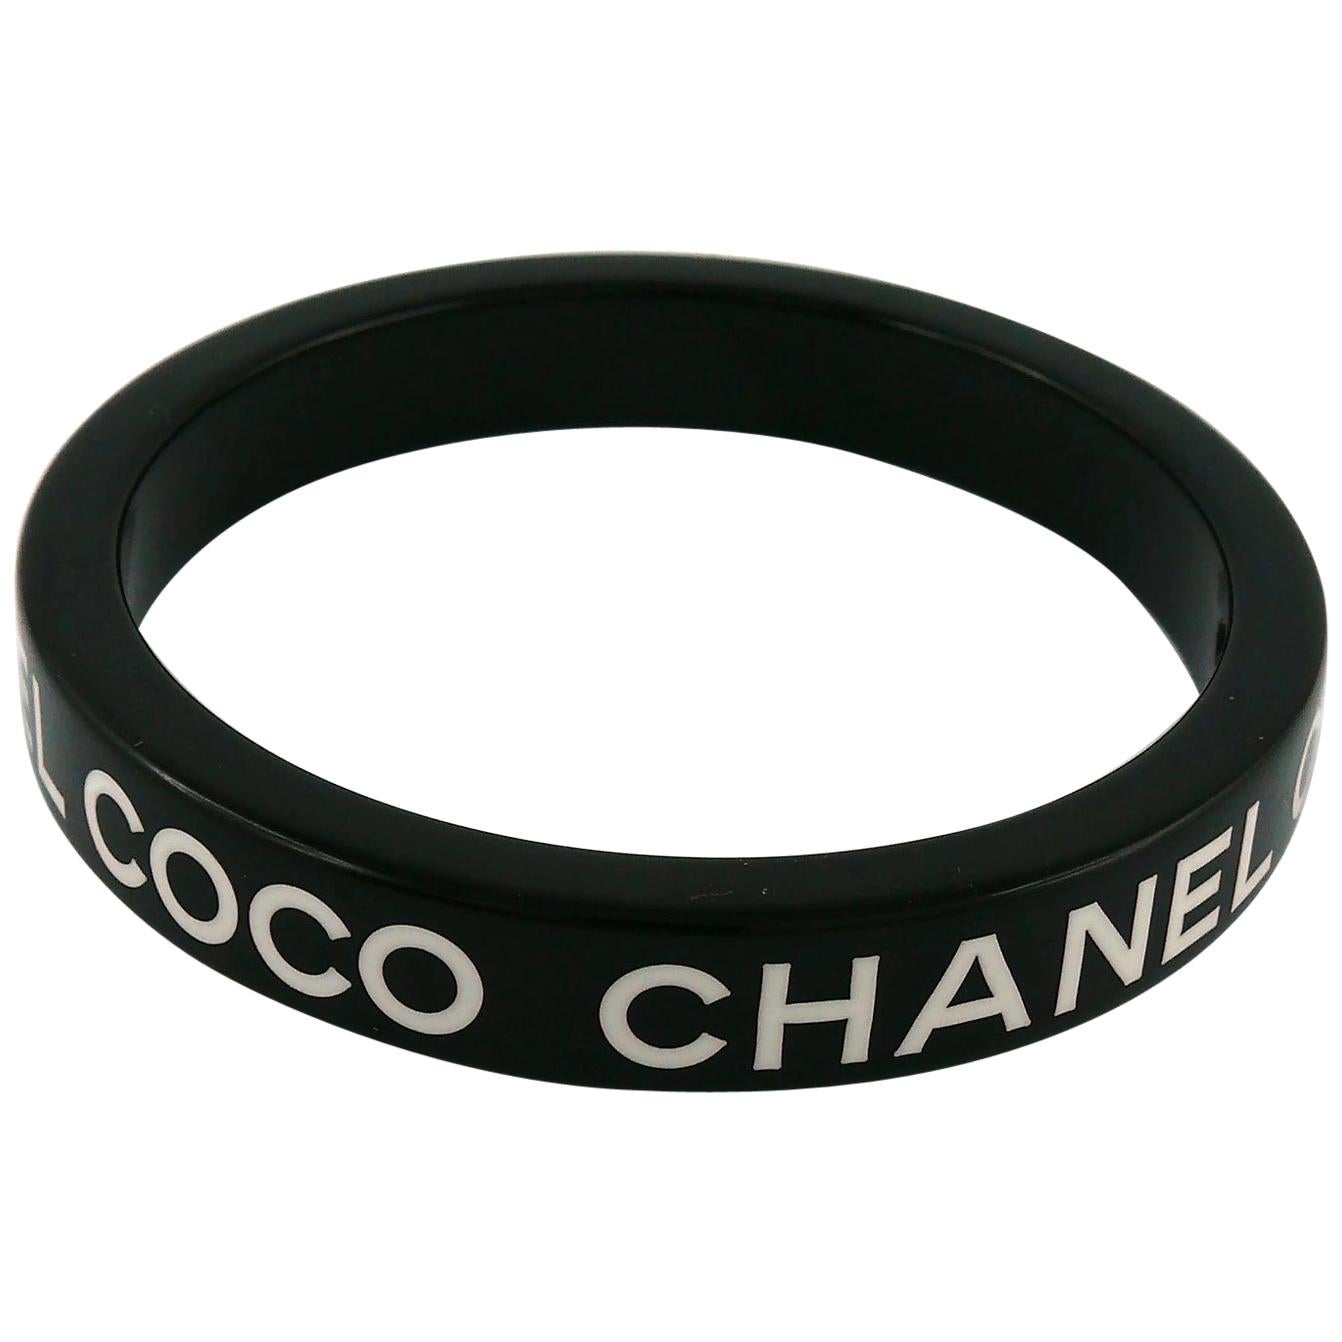 Chanel Black & White Coco Chanel Bangle Bracelet